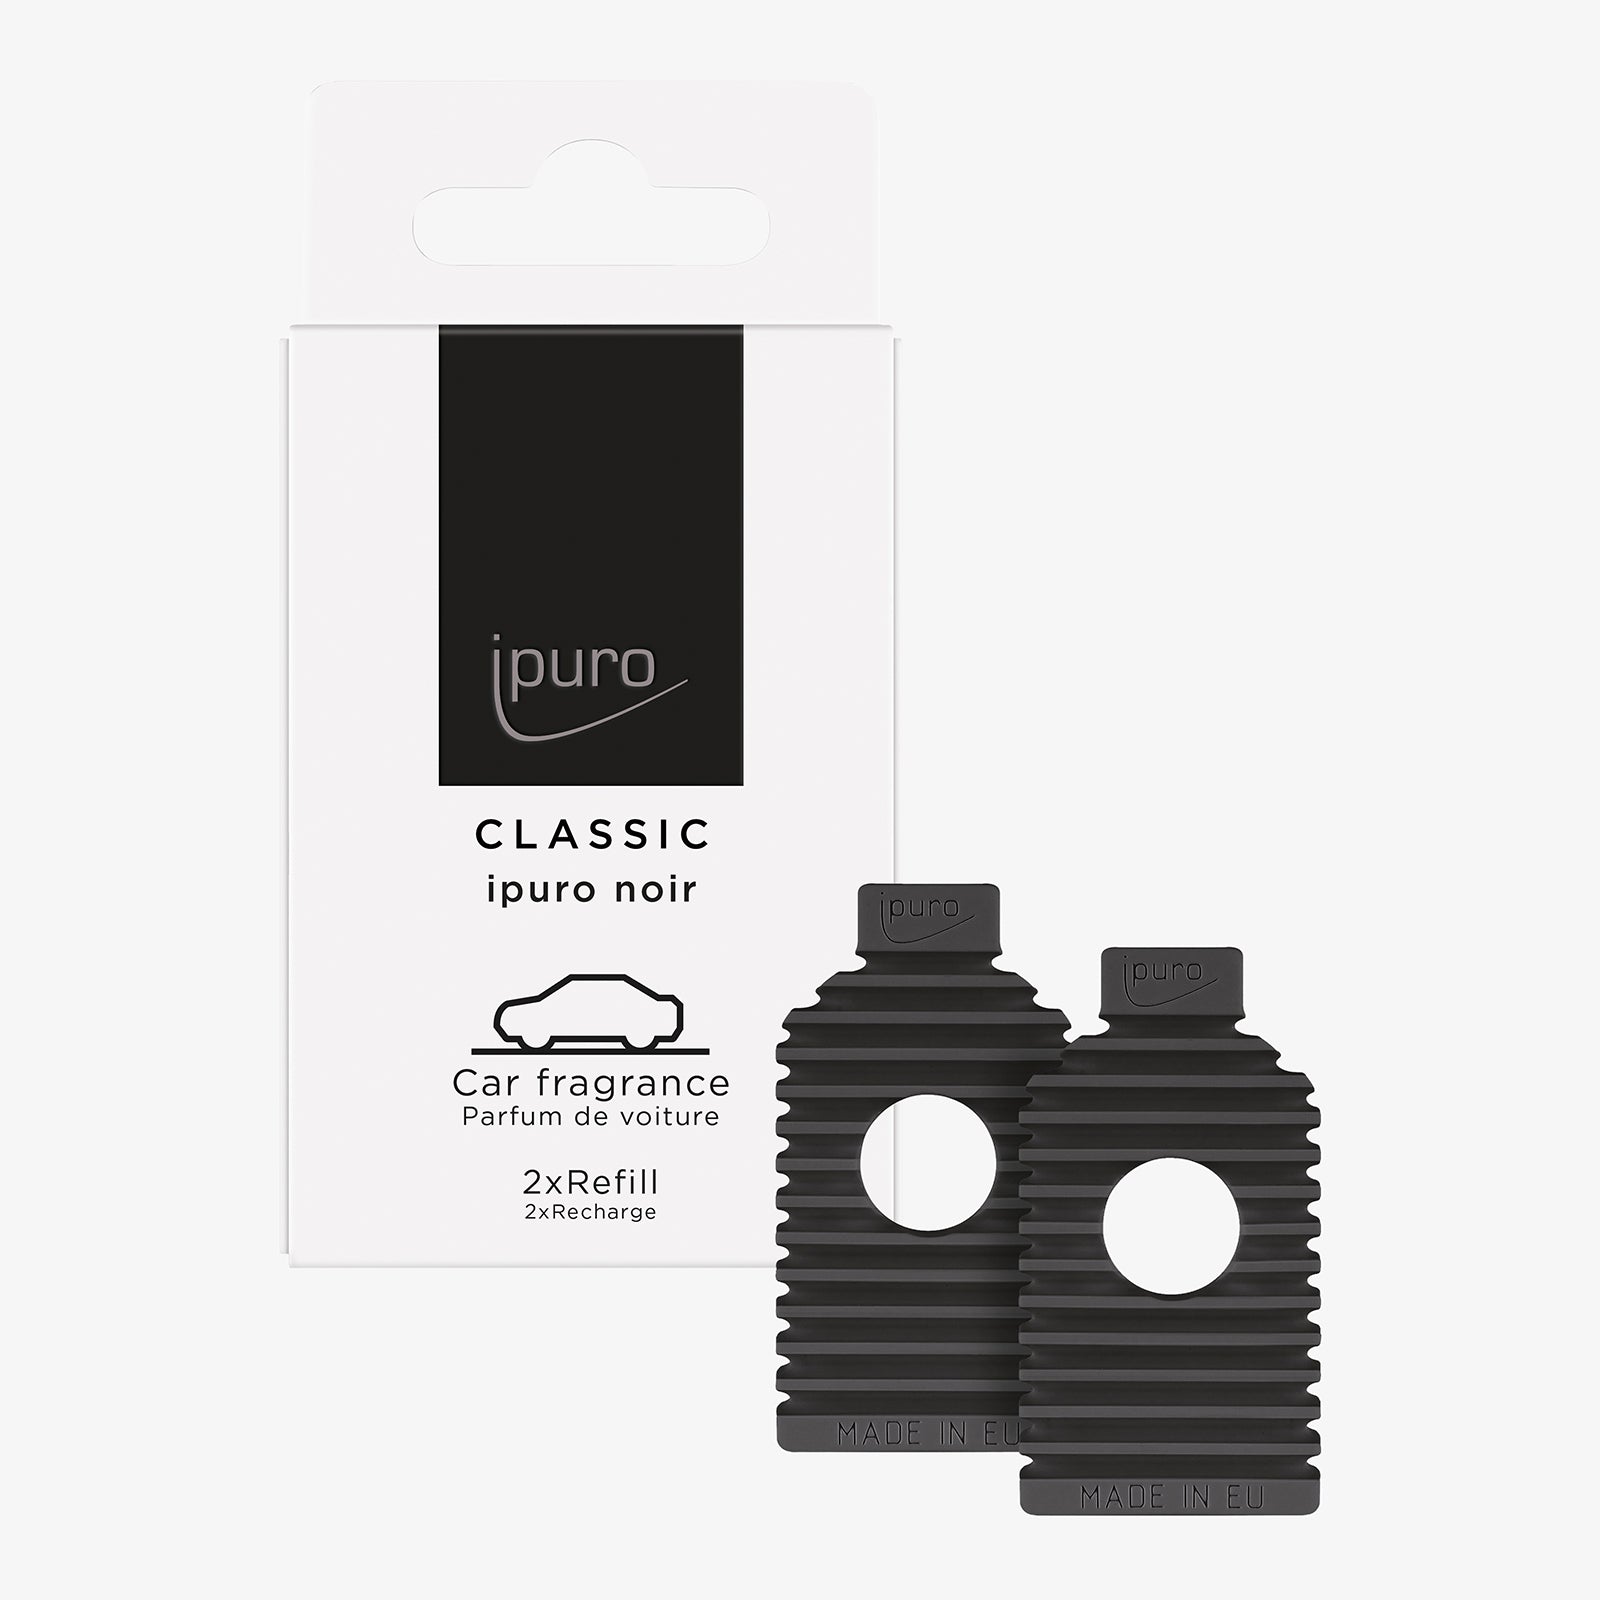 CLASSIC ipuro noir car fragrance refill essence – IPURO